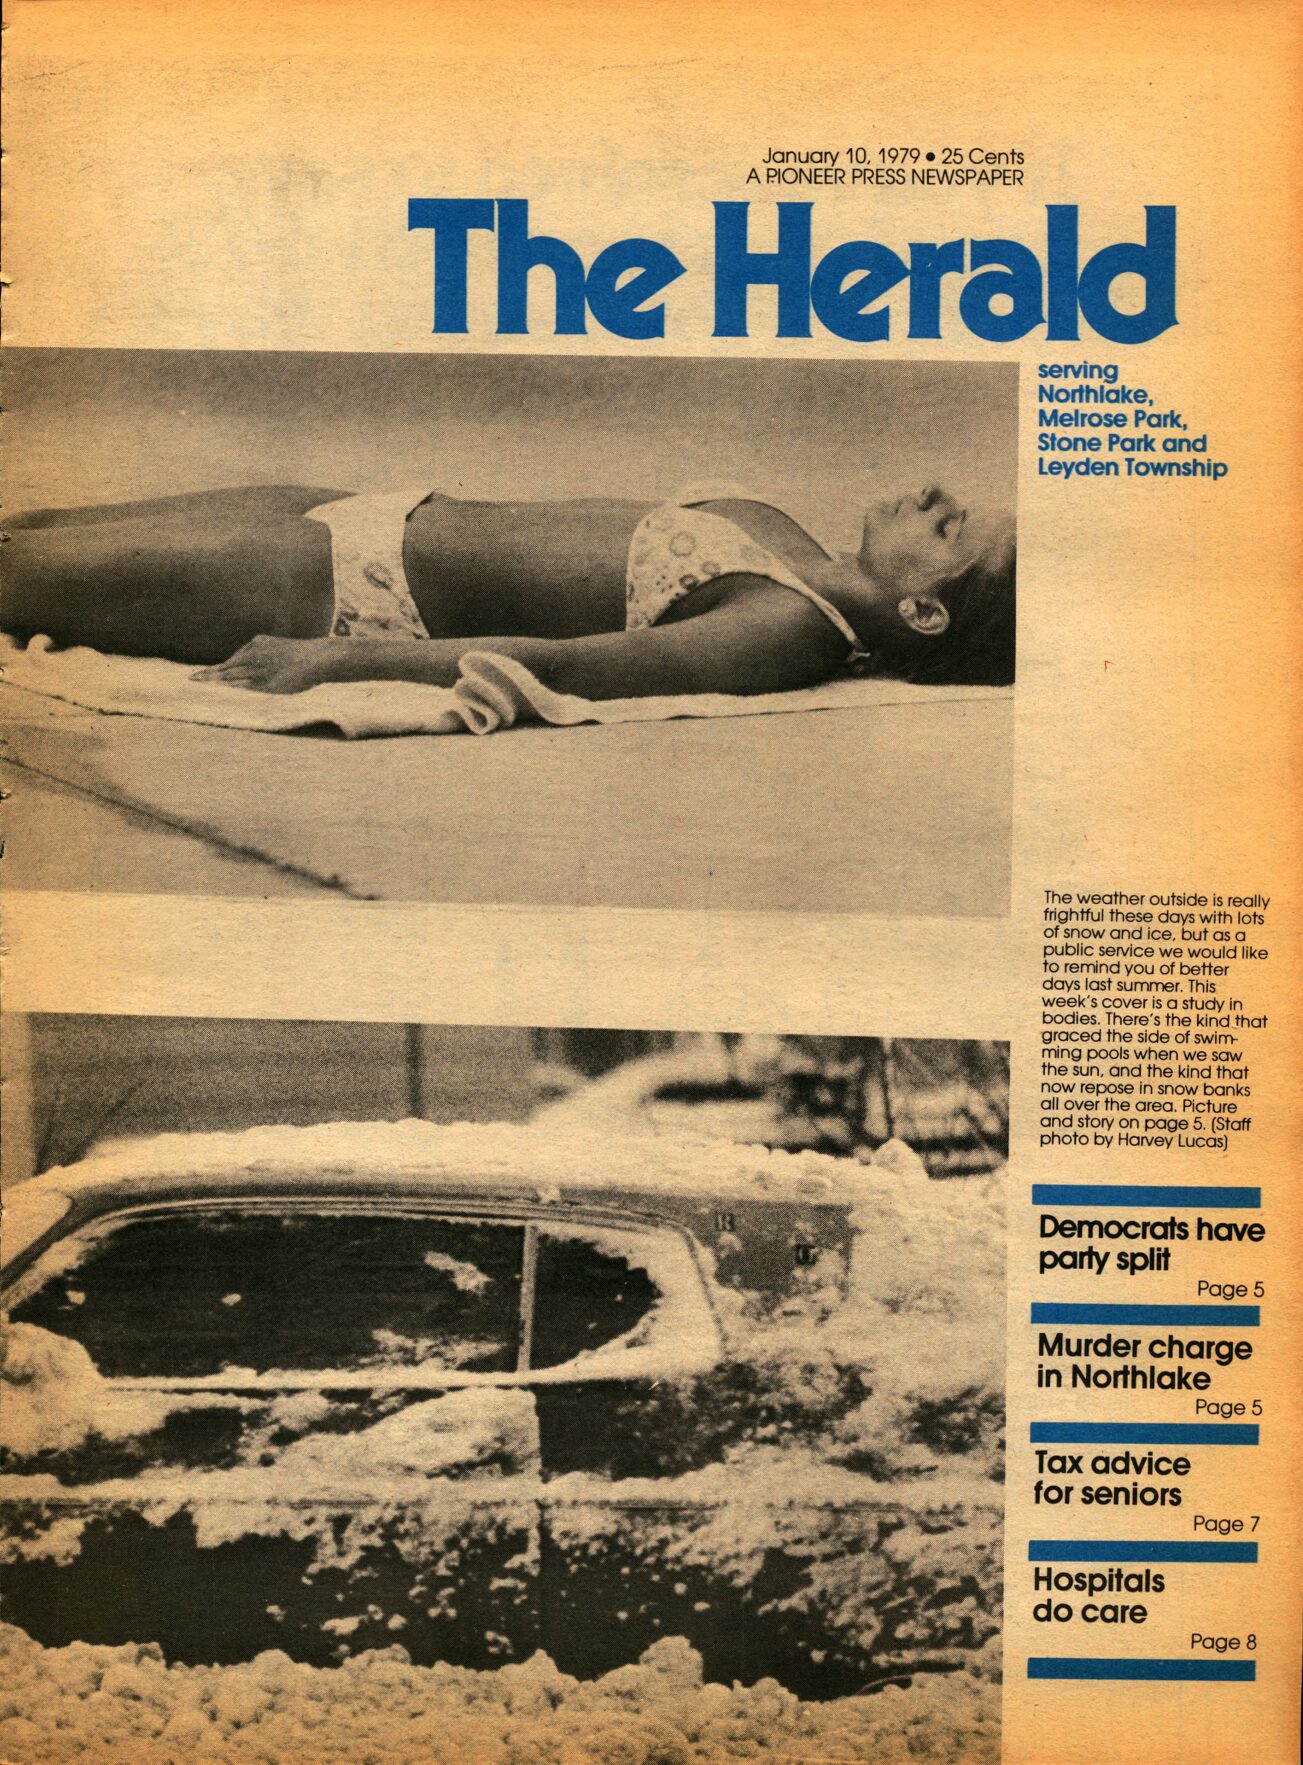 The Herald – 19790110